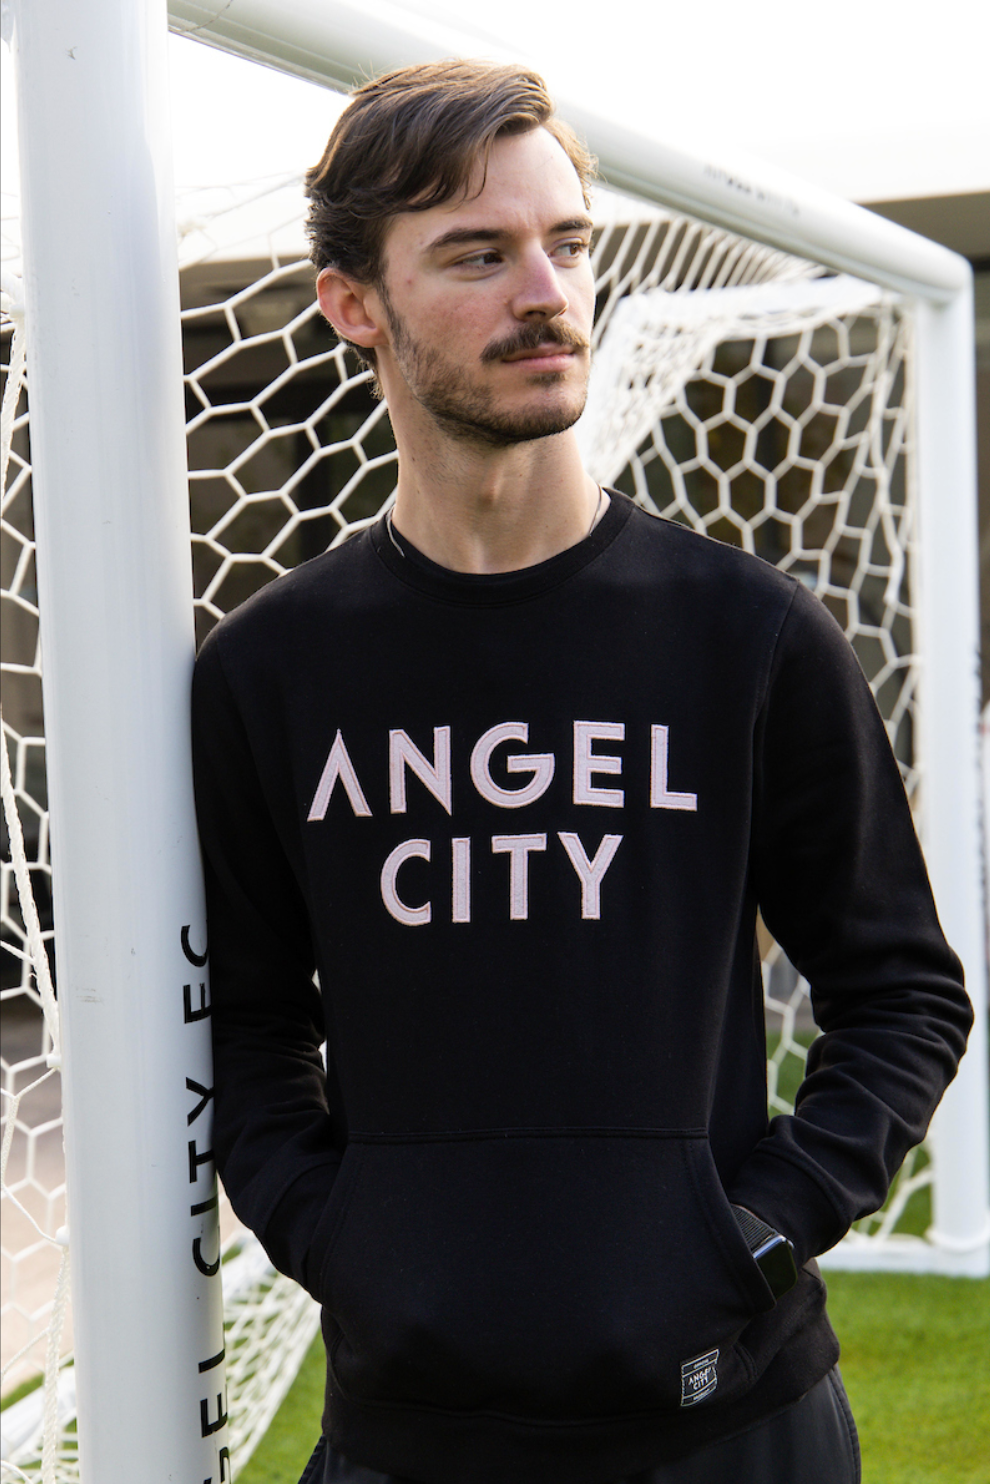 Angel_City_FC_Unisex_Felt_Embroidery_Black_Crewneck_with_Kangaroo_Pocket.png